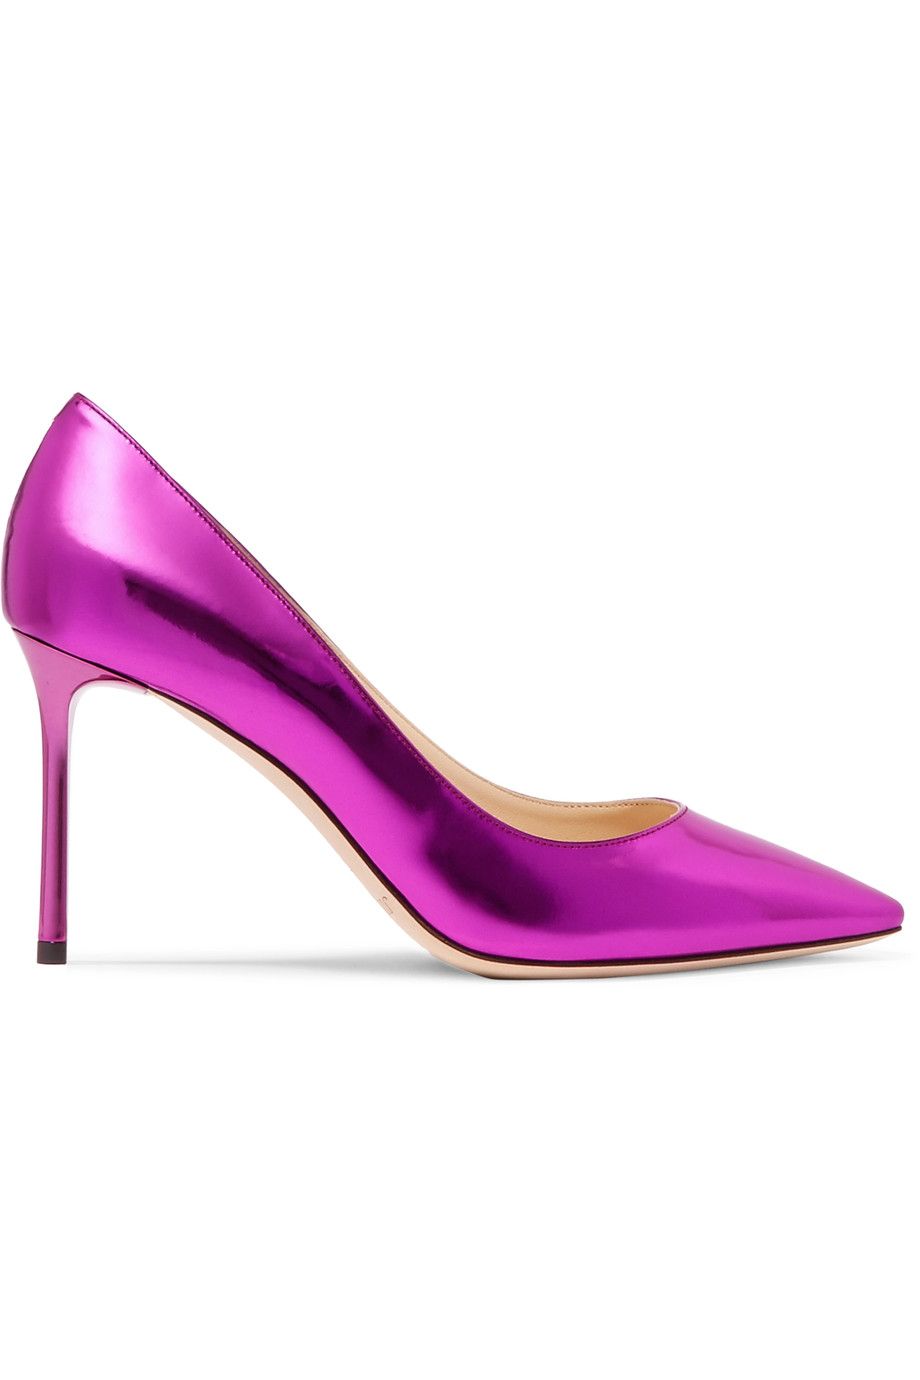 Purple, Magenta, Pink, Violet, Lavender, Maroon, Basic pump, Court shoe, Dress shoe, Bridal shoe, 